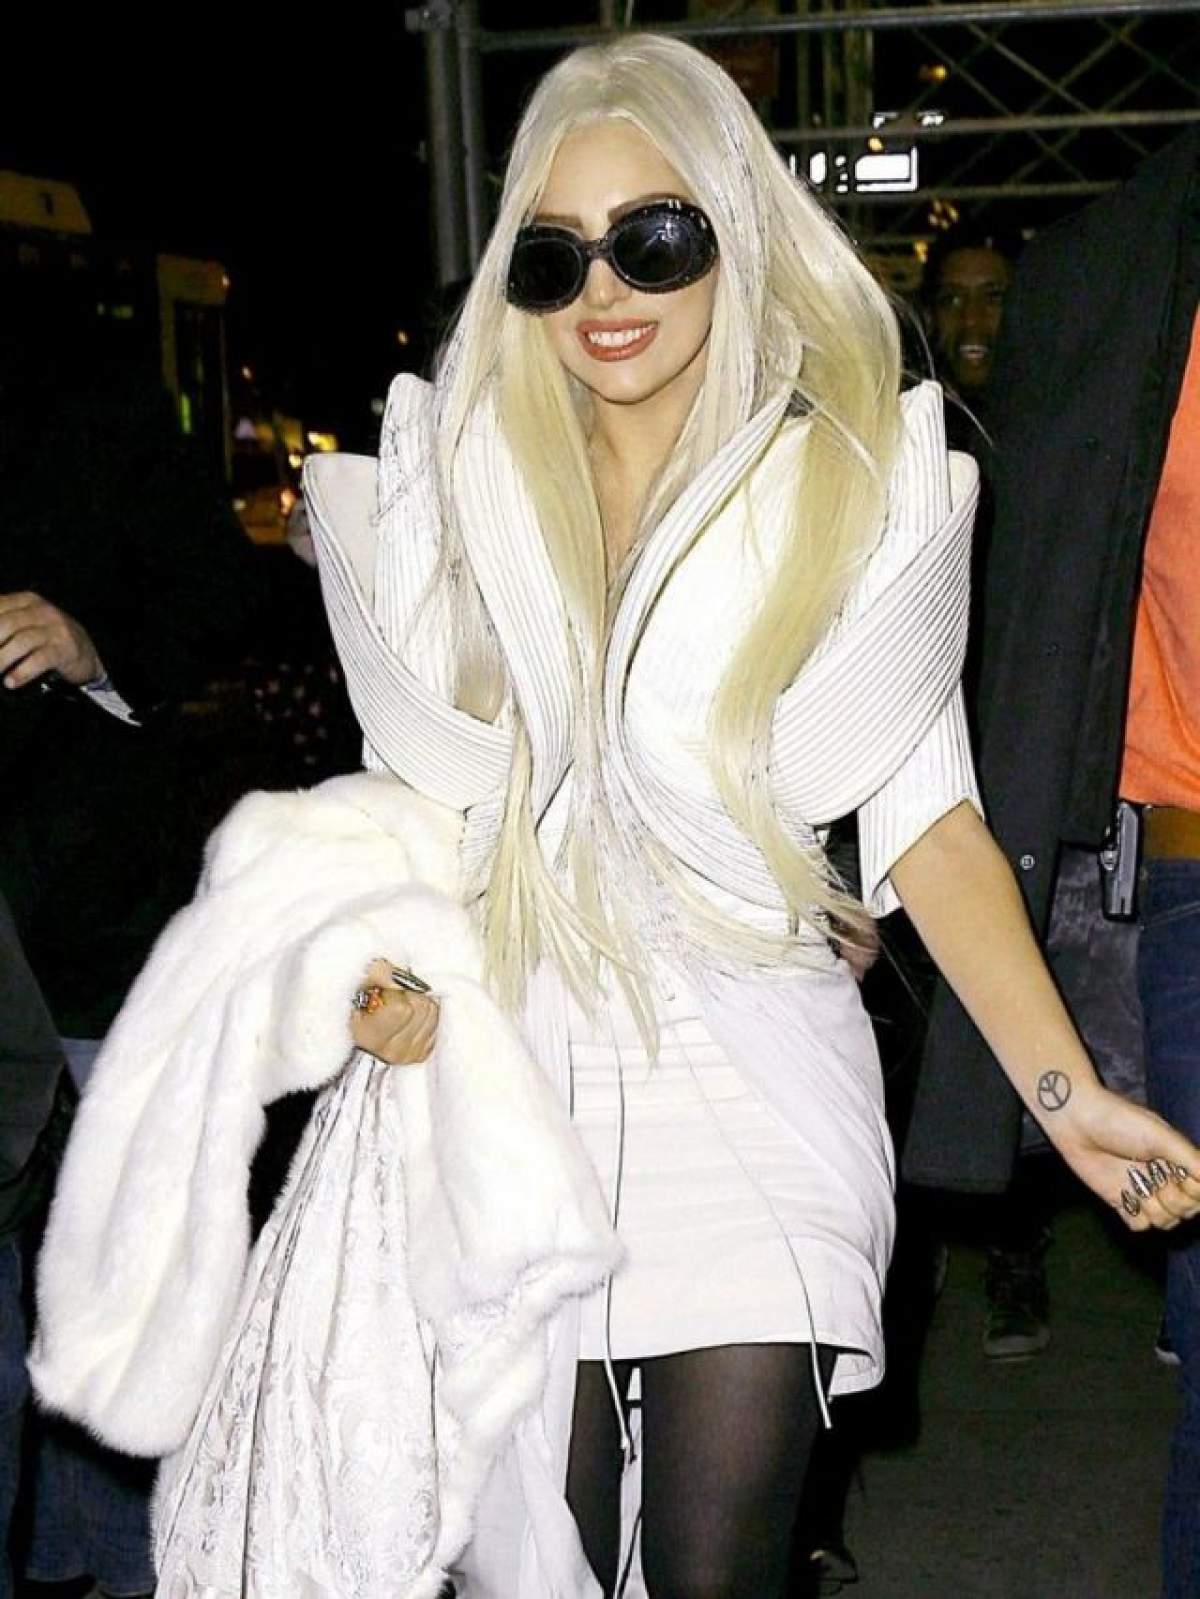 Asa arata rochia creata de un roman pentru Lady Gaga!